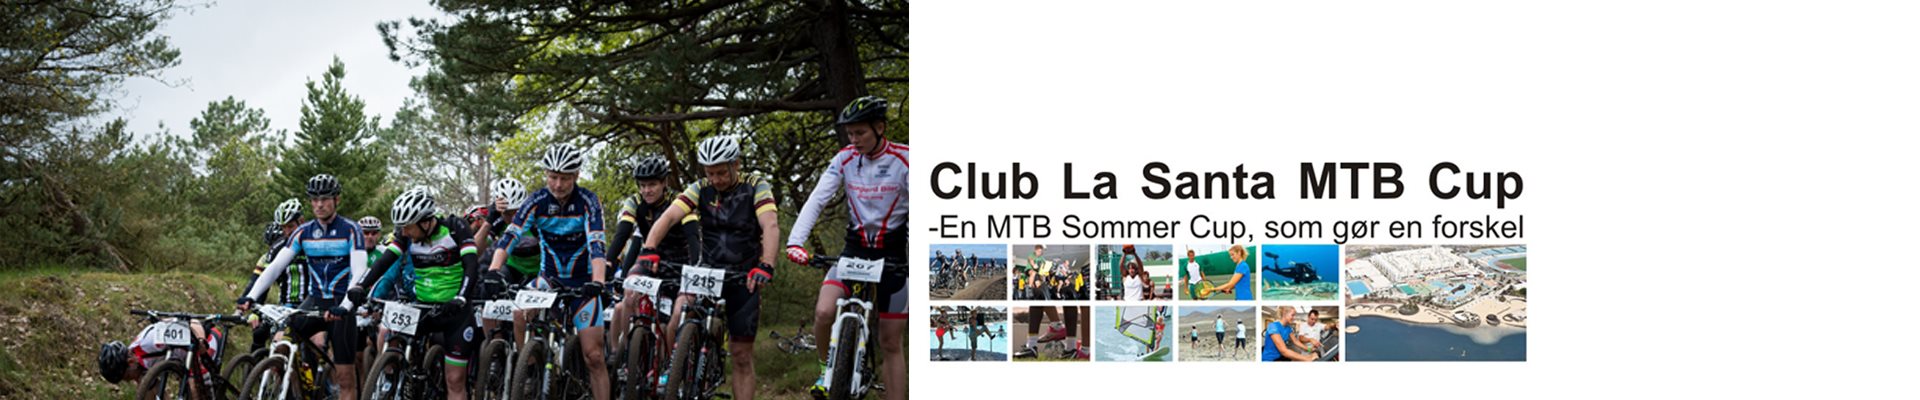 CLUB LA SANTA MTB CUP '19 - #6 Nymindegab